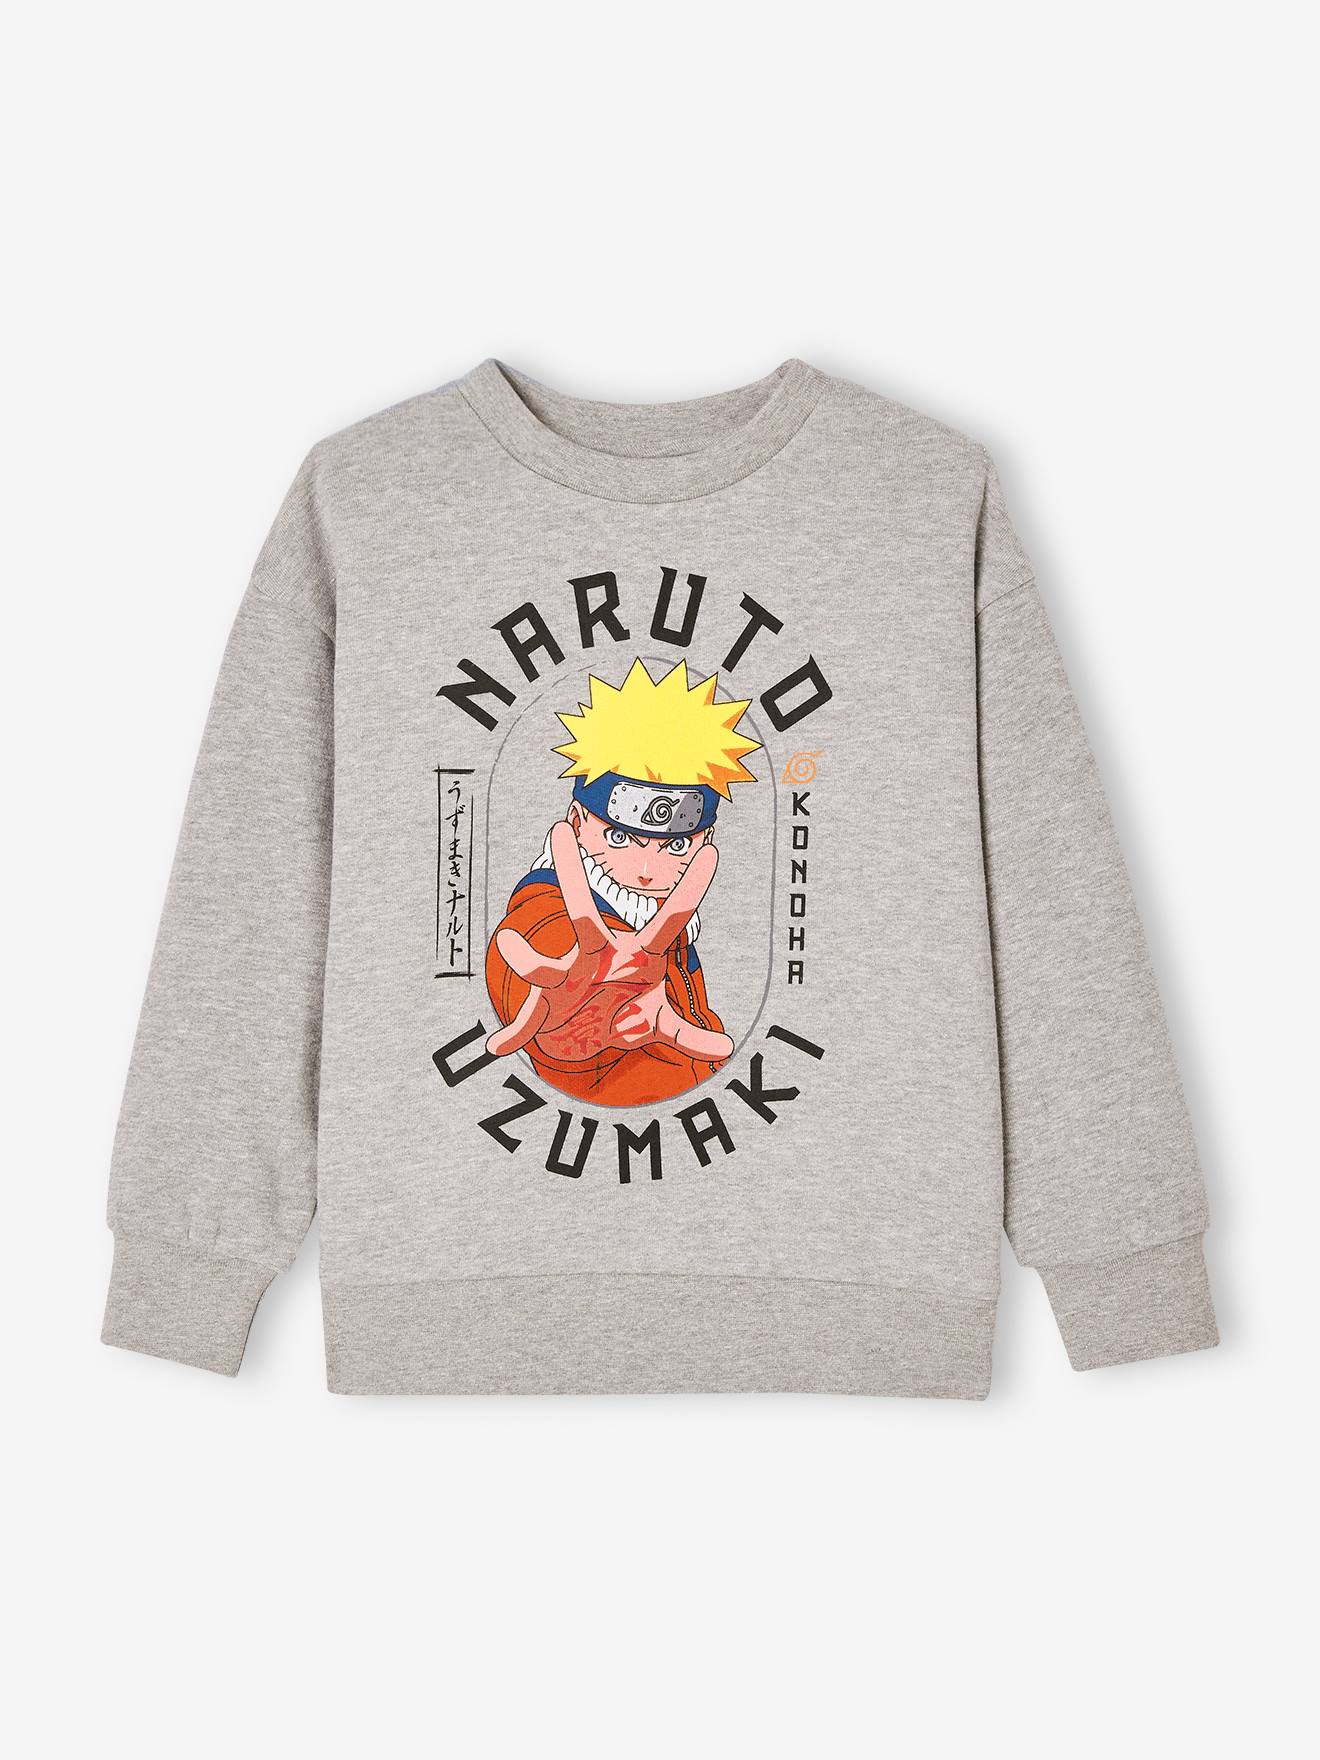 Naruto(r) Uzumaki Sweatshirt for Boys marl grey